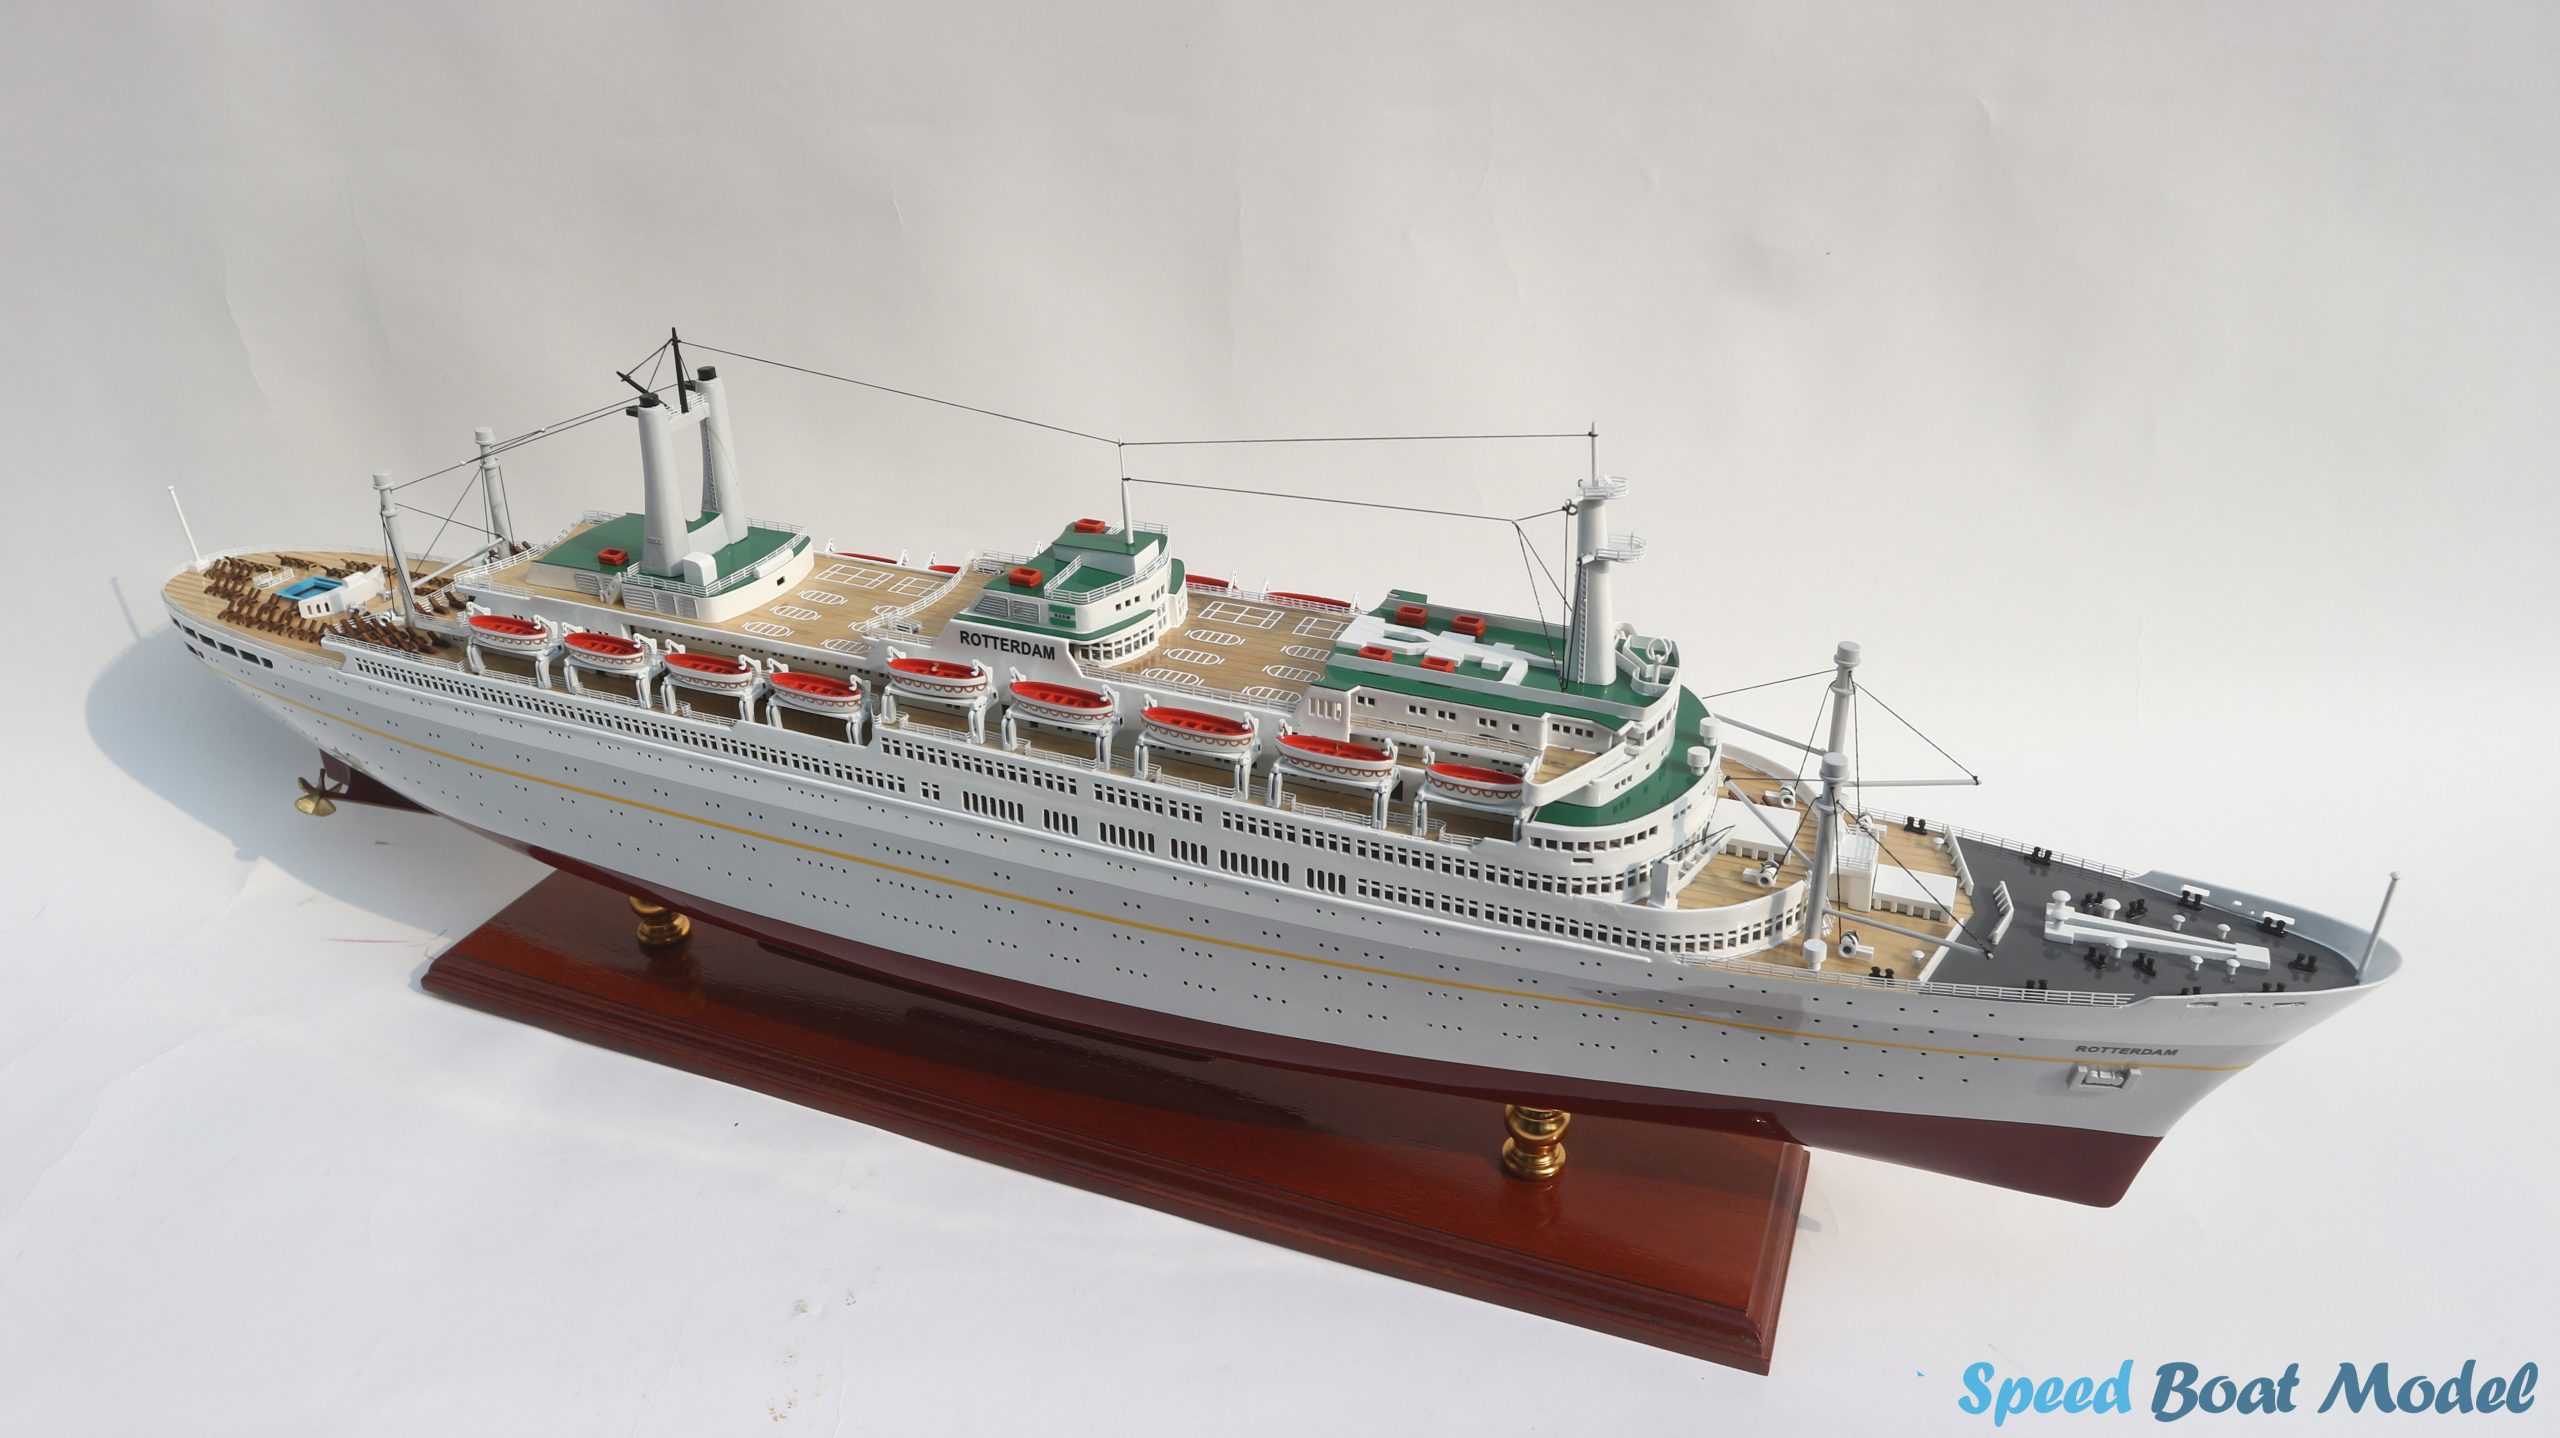 SS Rotterdam Cruise Ship Model 36.2"